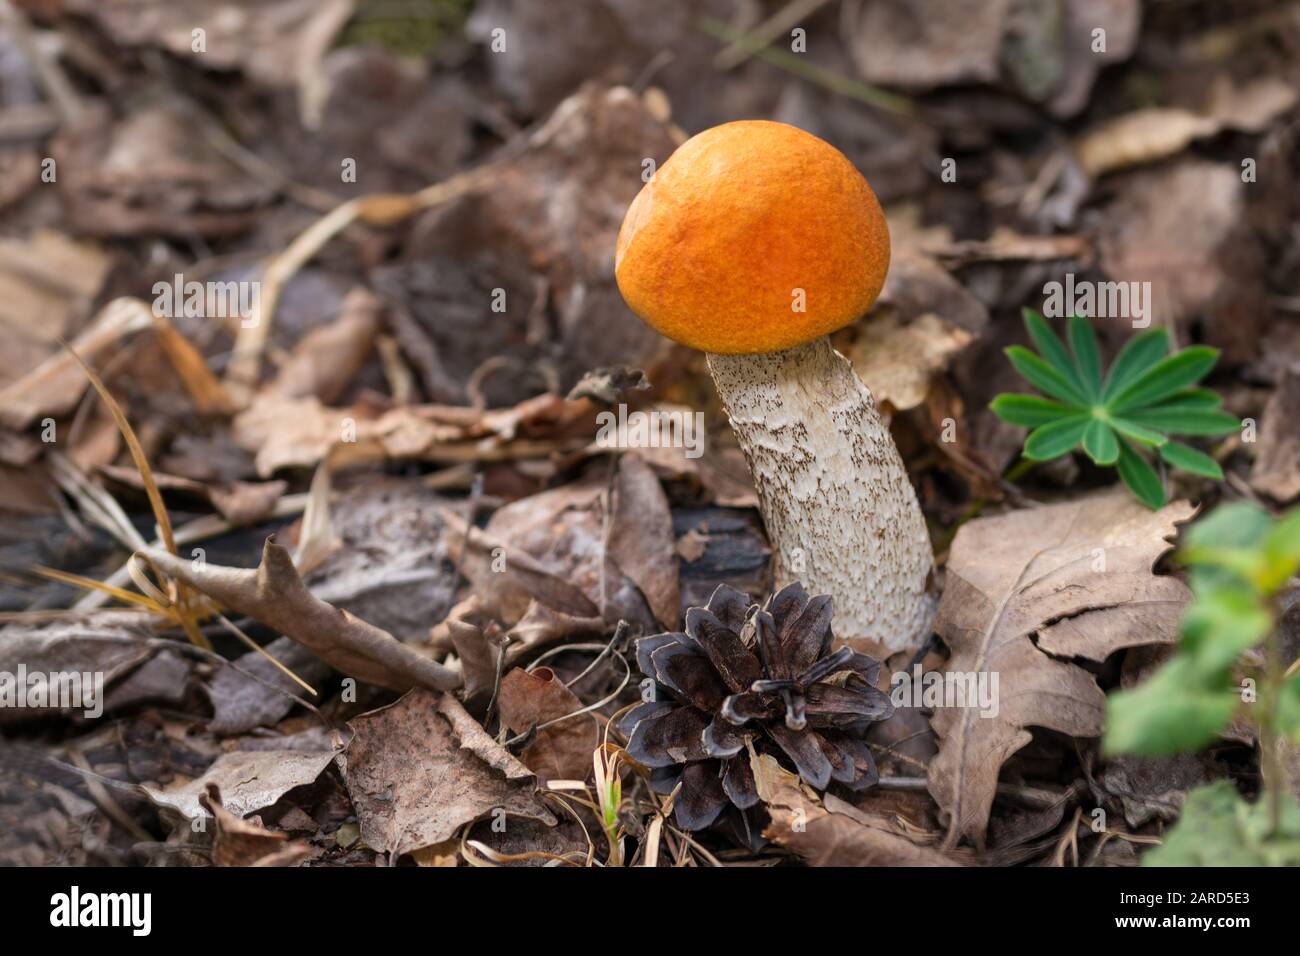 Small orange birch bolete mushroom. Leccinum versipelle. Round cap on white stem. Young edible boletus growing in dry fallen leaves. Green plant, cone. Stock Photo